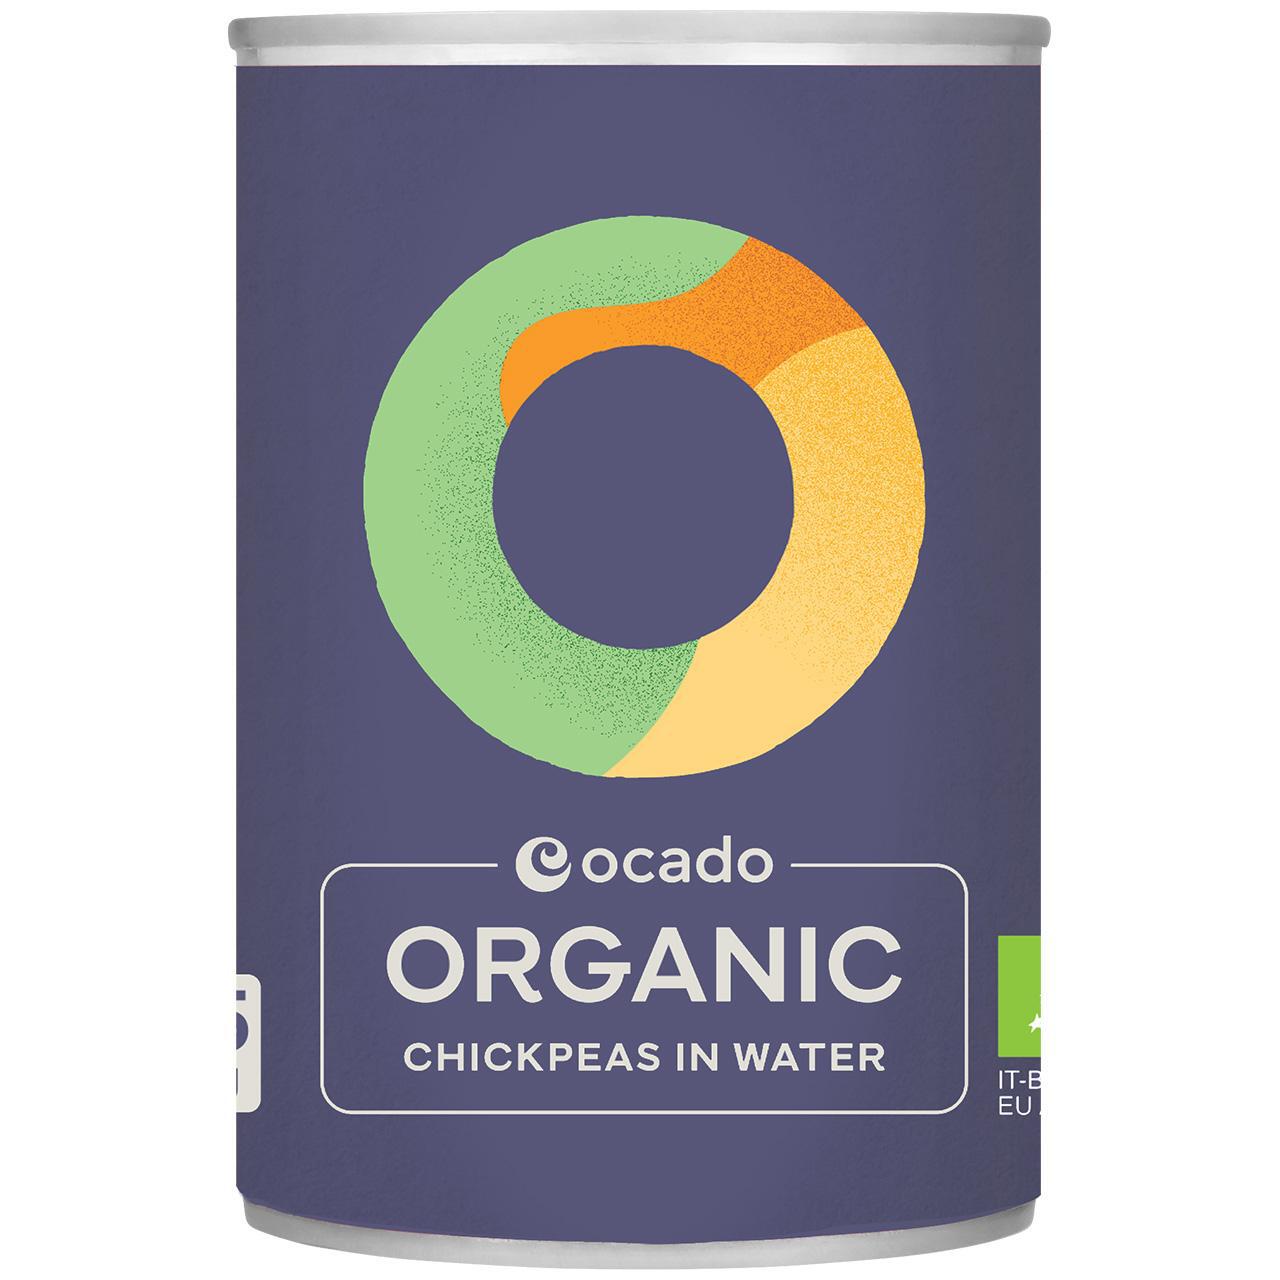 Ocado Organic Chickpeas in Water 400g